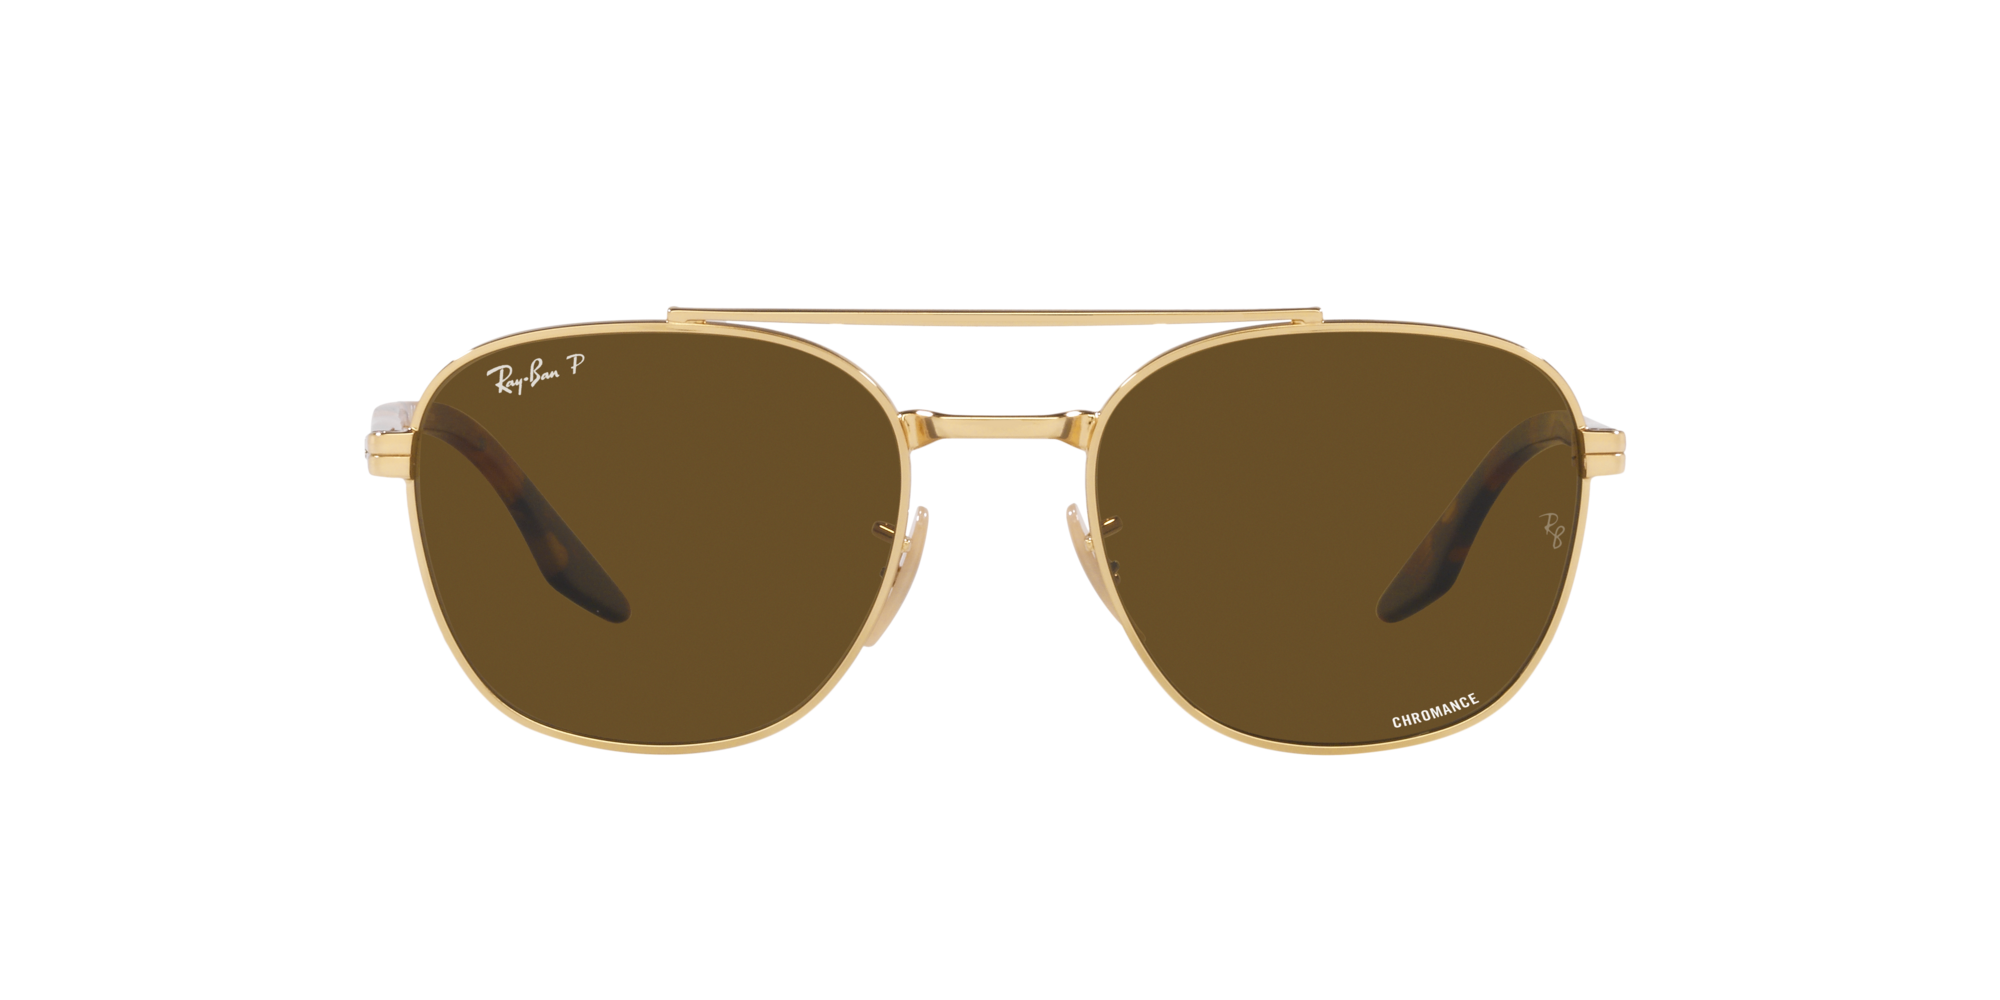 Ray-Ban Men UV Protected Green Lens Pilot Sunglasses - 0RB3449I92197159 :  Amazon.in: Fashion